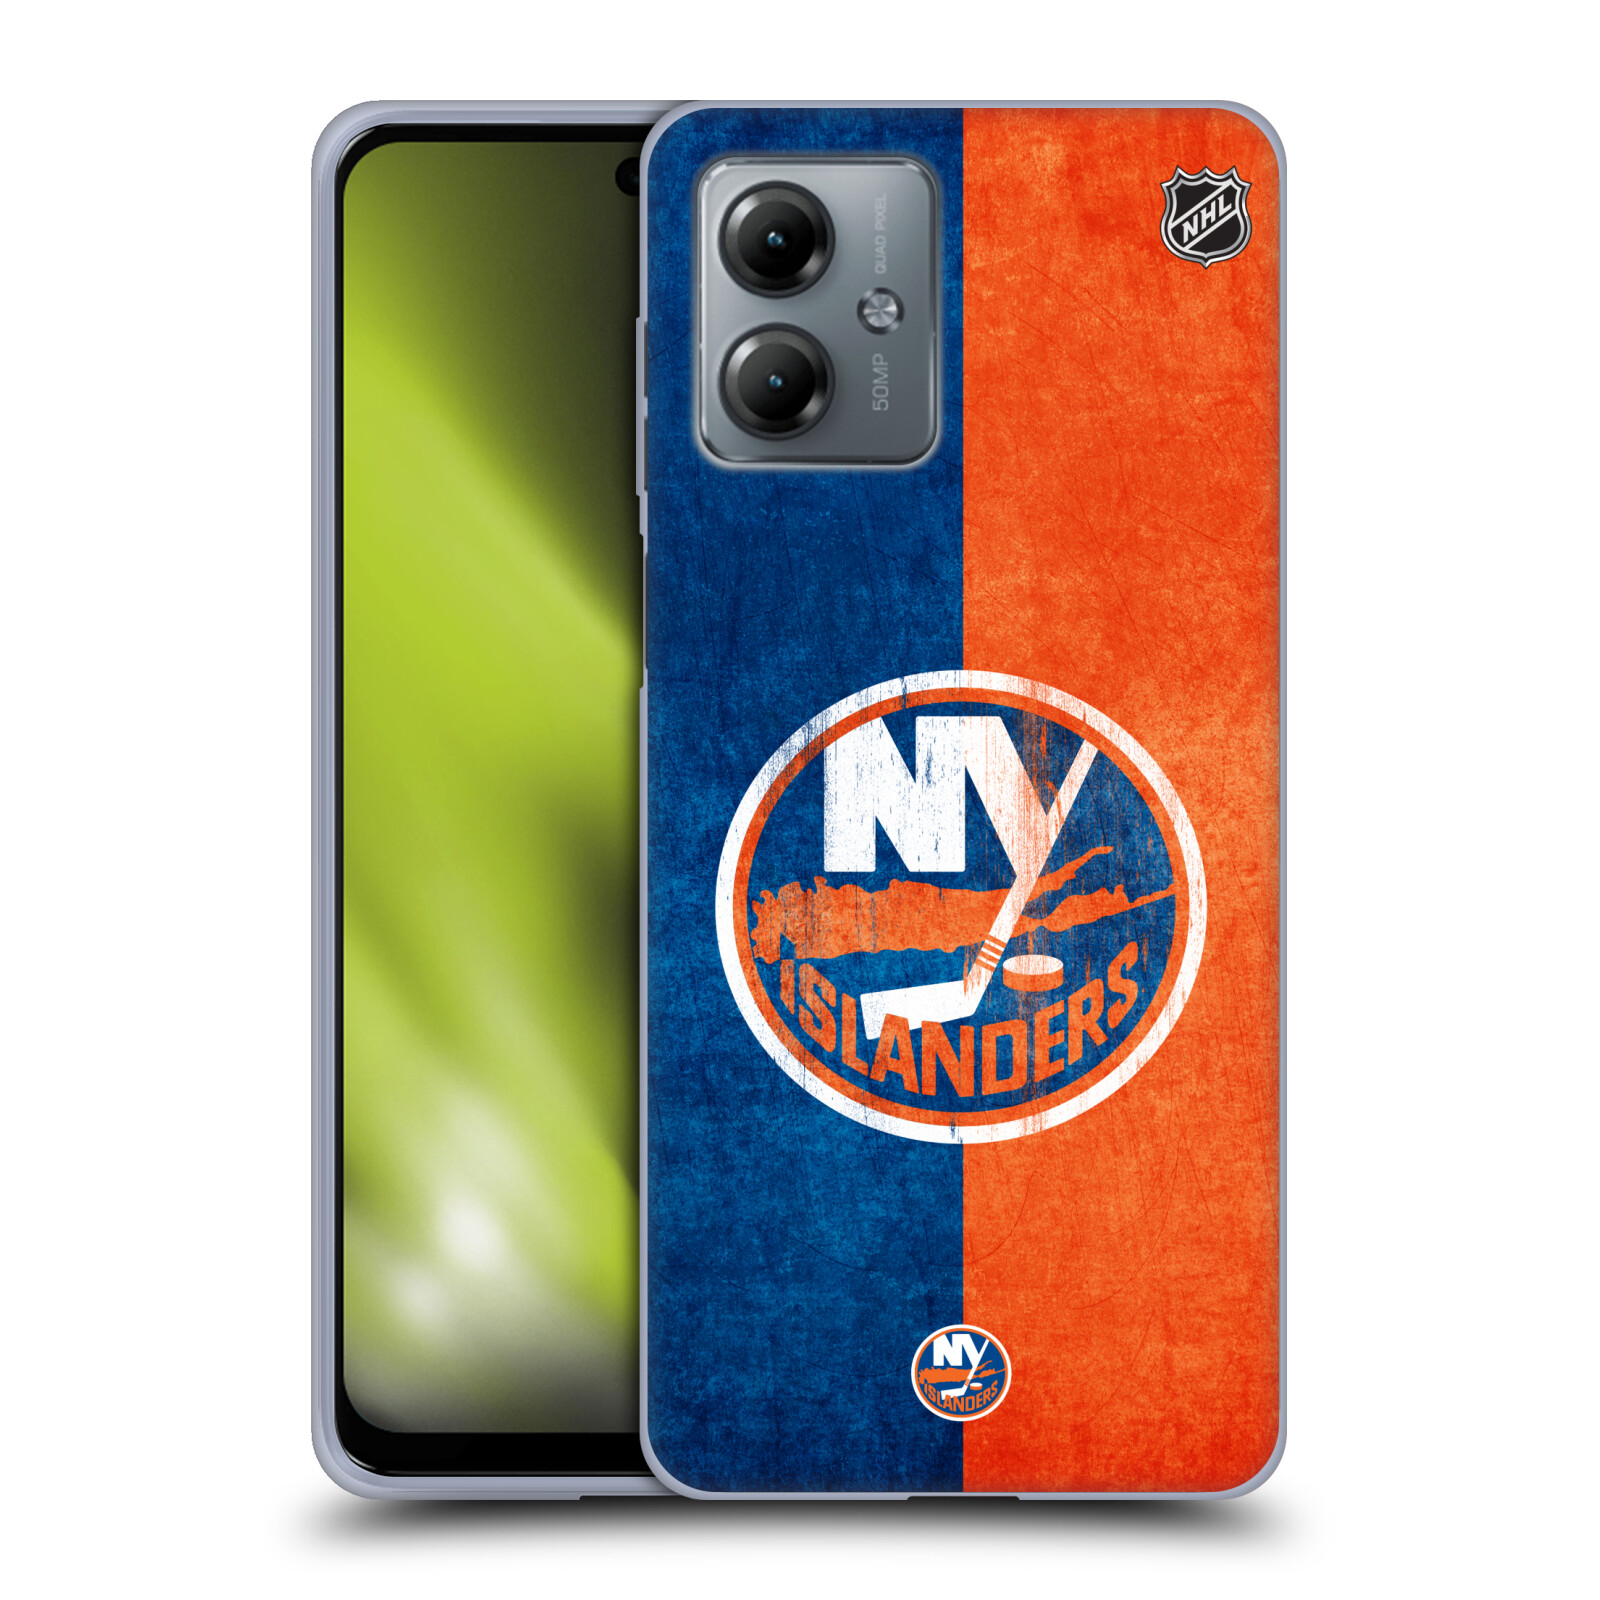 Silikonové pouzdro na mobil Motorola Moto G14 - NHL - Půlené logo New York Islanders (Silikonový kryt, obal, pouzdro na mobilní telefon Motorola Moto G14 s licencovaným motivem NHL - Půlené logo New York Islanders)